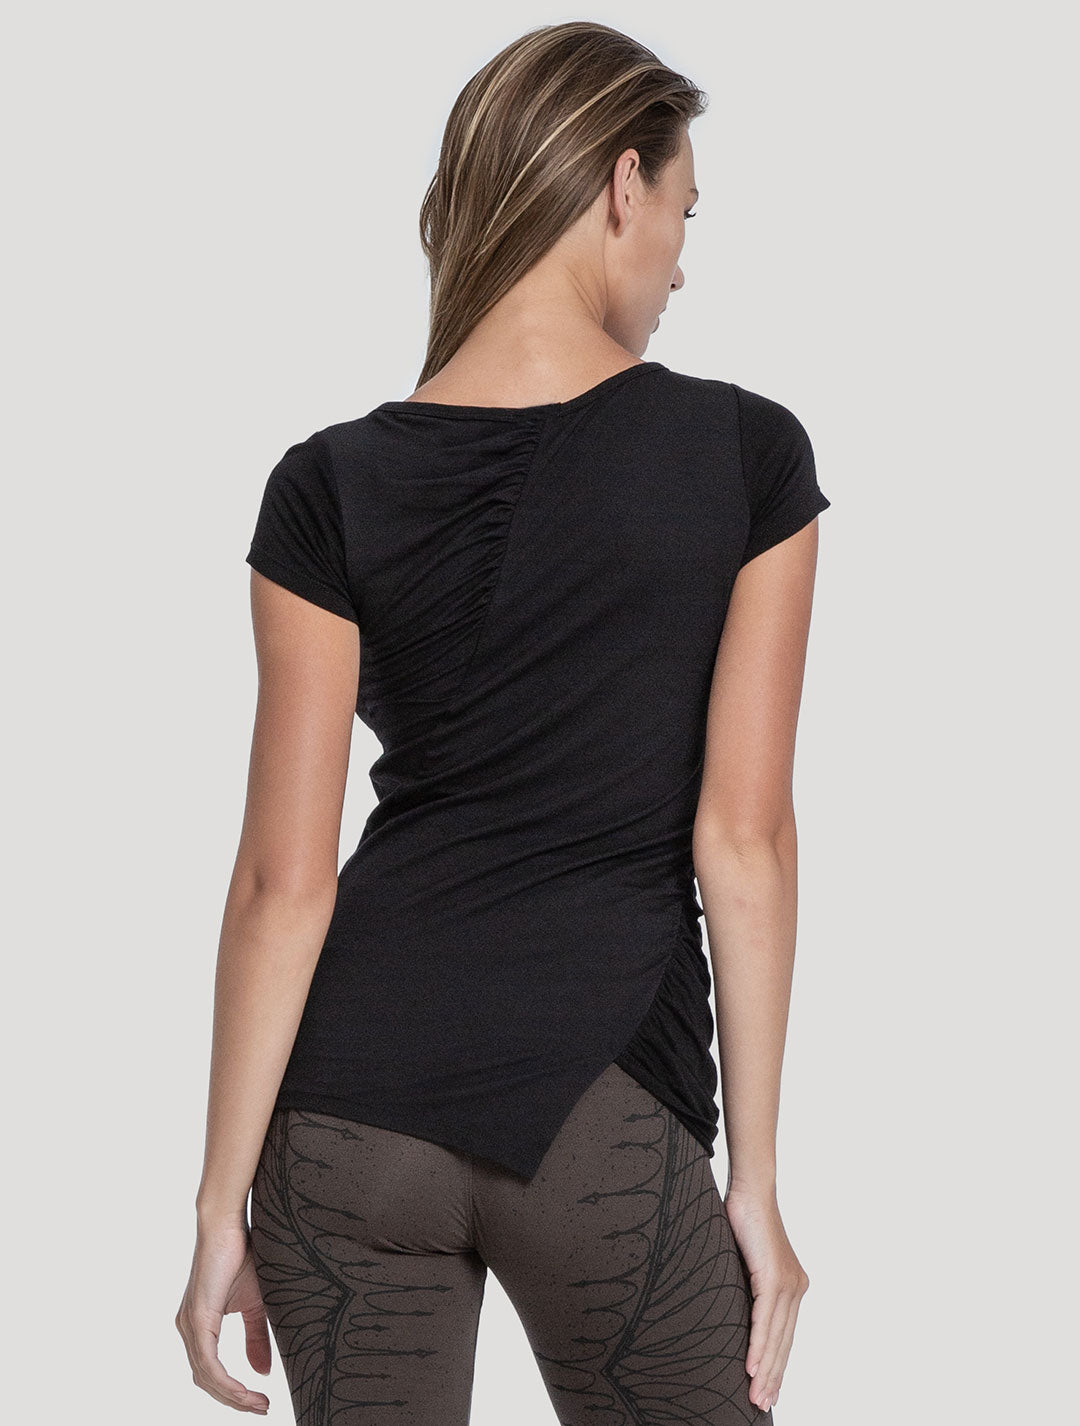 'Kirtan' Short Sleeves Black Top - Psylo Fashion